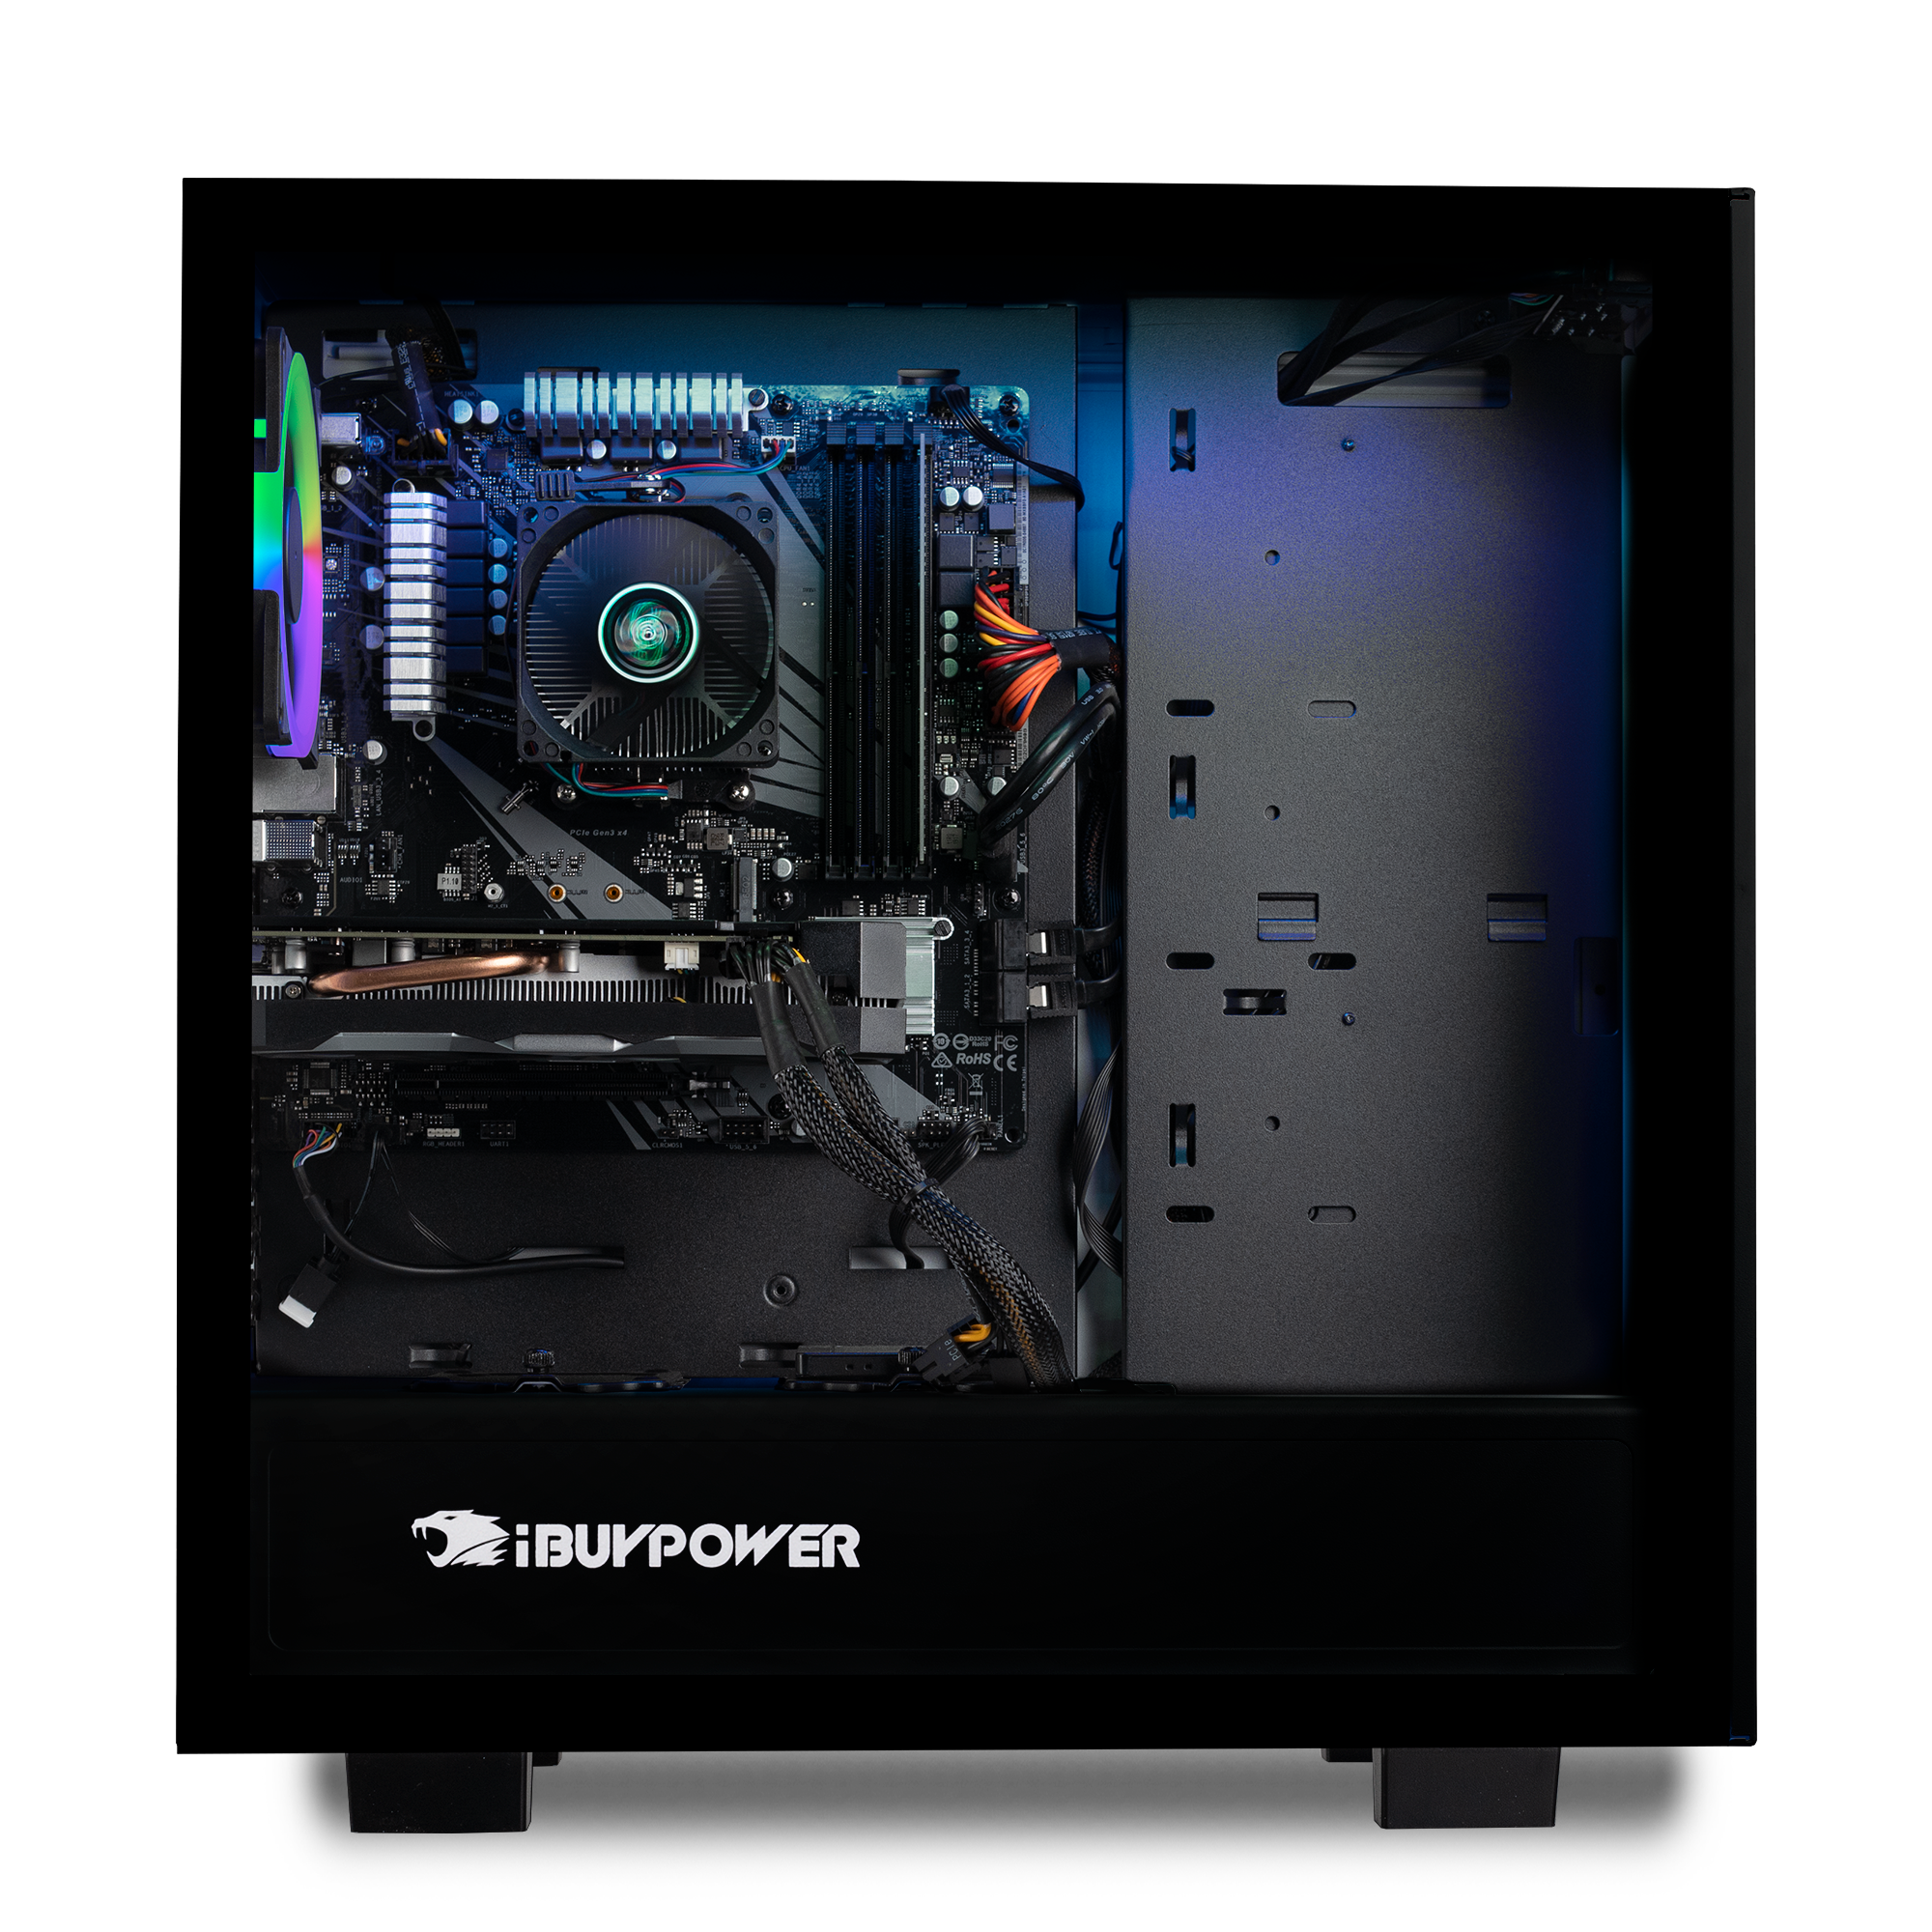 iBUYPOWER Gaming Desktop Tower, AMD Ryzen 3 2300X, 8GB DDR4 2666 RAM, NVIDIA GeForce GT1030, 1TB HDD, Windows 10 Home, Black, WA563GT4 - image 3 of 6